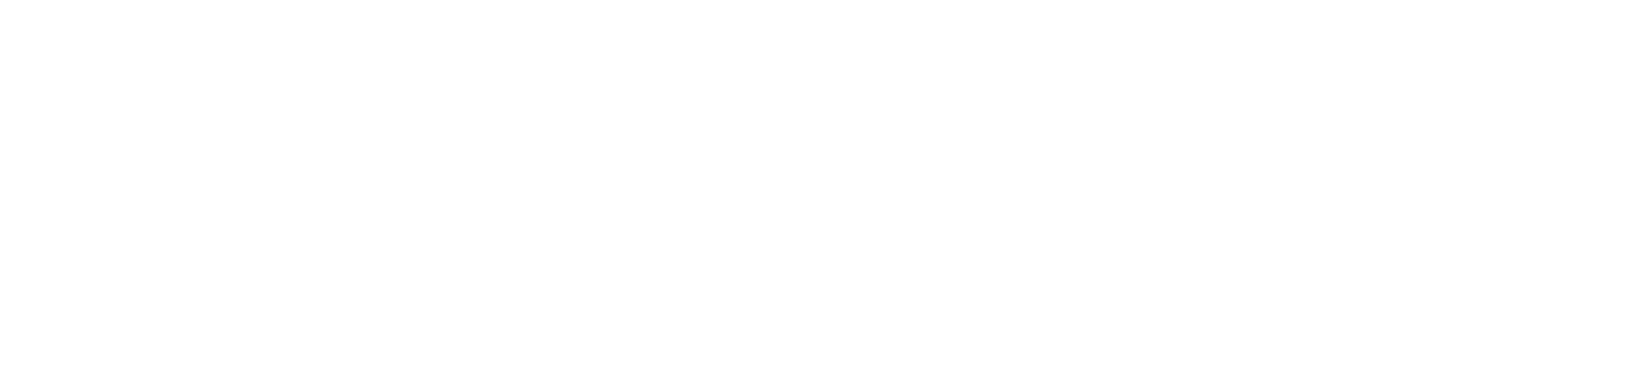 ACI | CQC Icon displaying a Good Rating